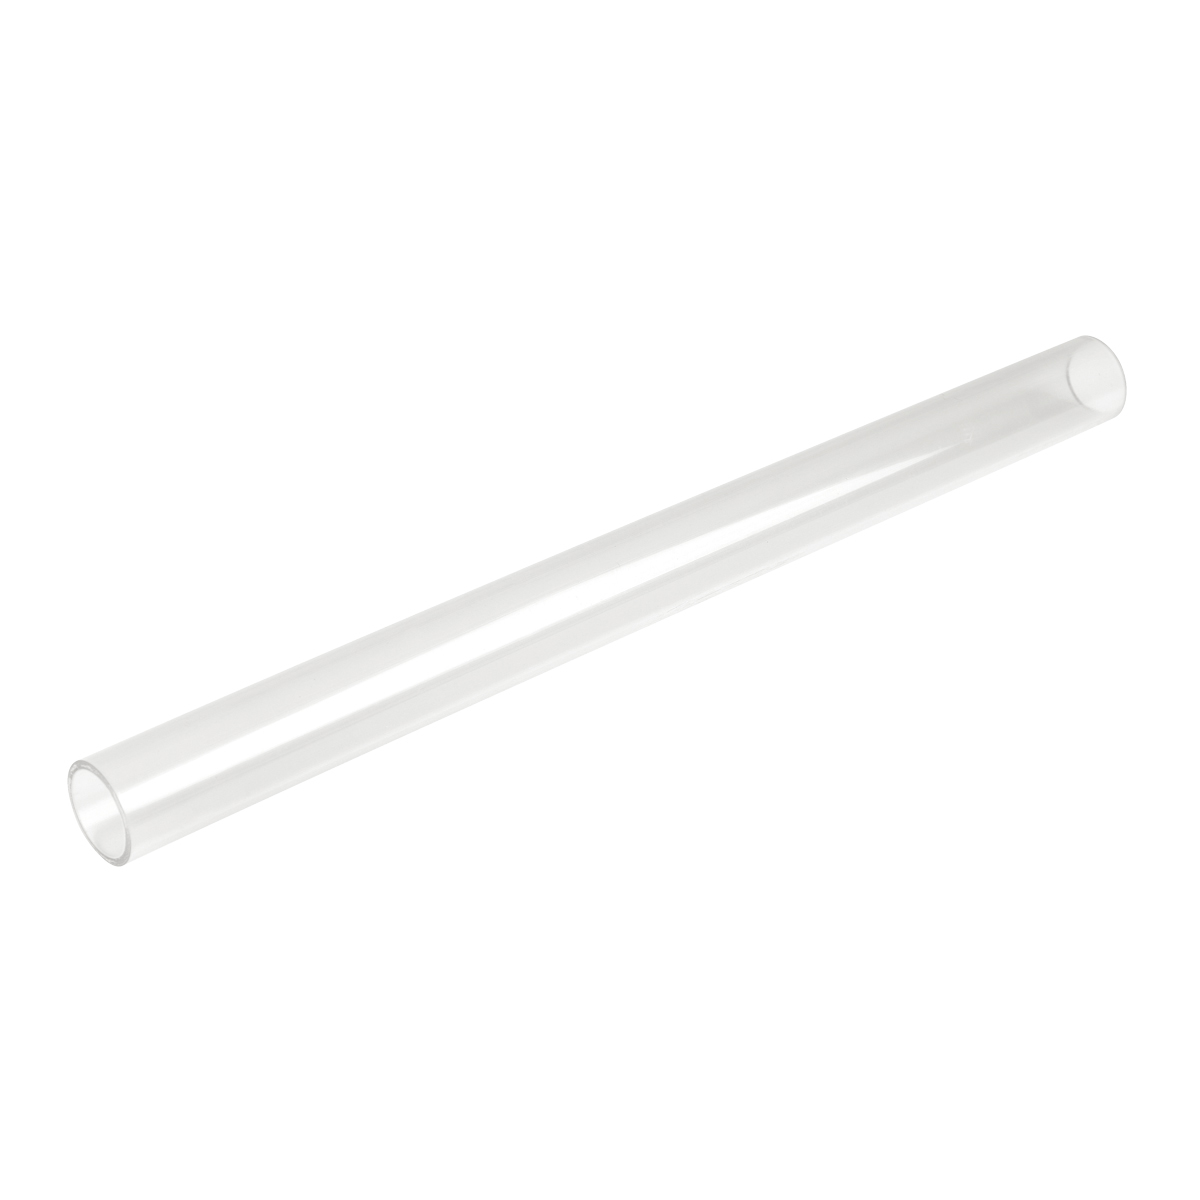 IBG® PVC-u pipe, transparent without socket, 5m, PN16/10 d20x1.5 IBG® PVC-u pipe, transparent without socket, 5m, PN16/10 d20x1.5